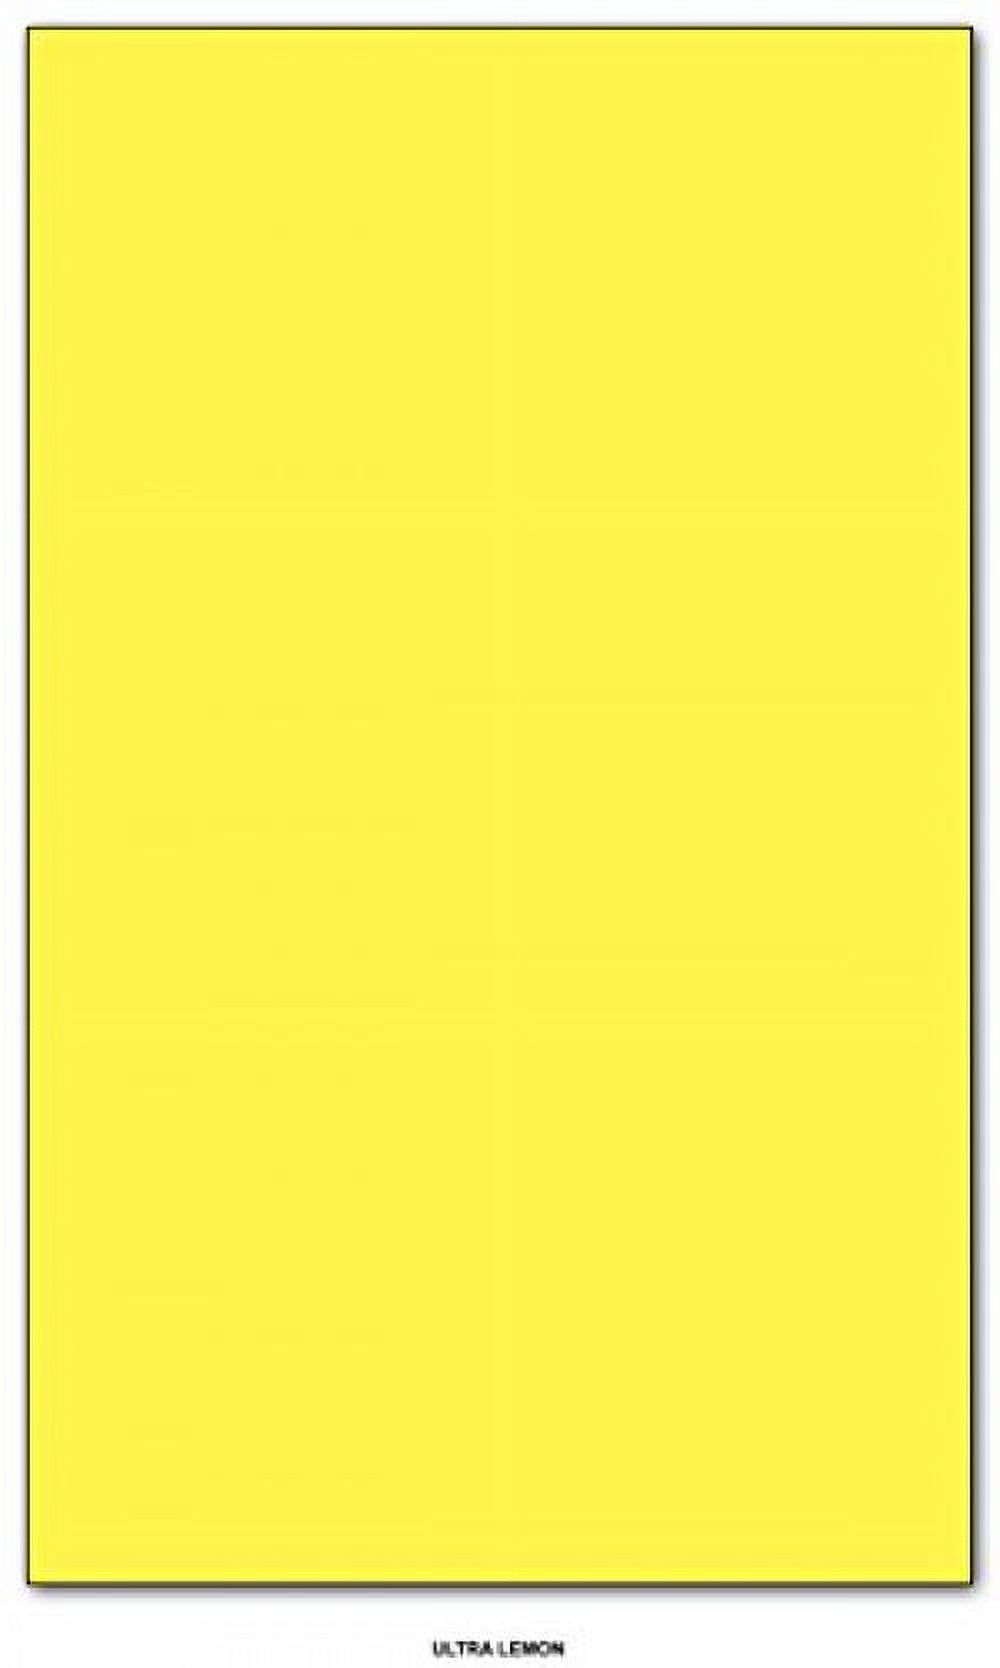 Mohawk BriteHue Bright Color Paper | Ultra Lemon | 24lb Bond / 60lb Text Paper | 8.5" x 14" (Legal Size) | 100 Sheets Per Pack - image 1 of 2